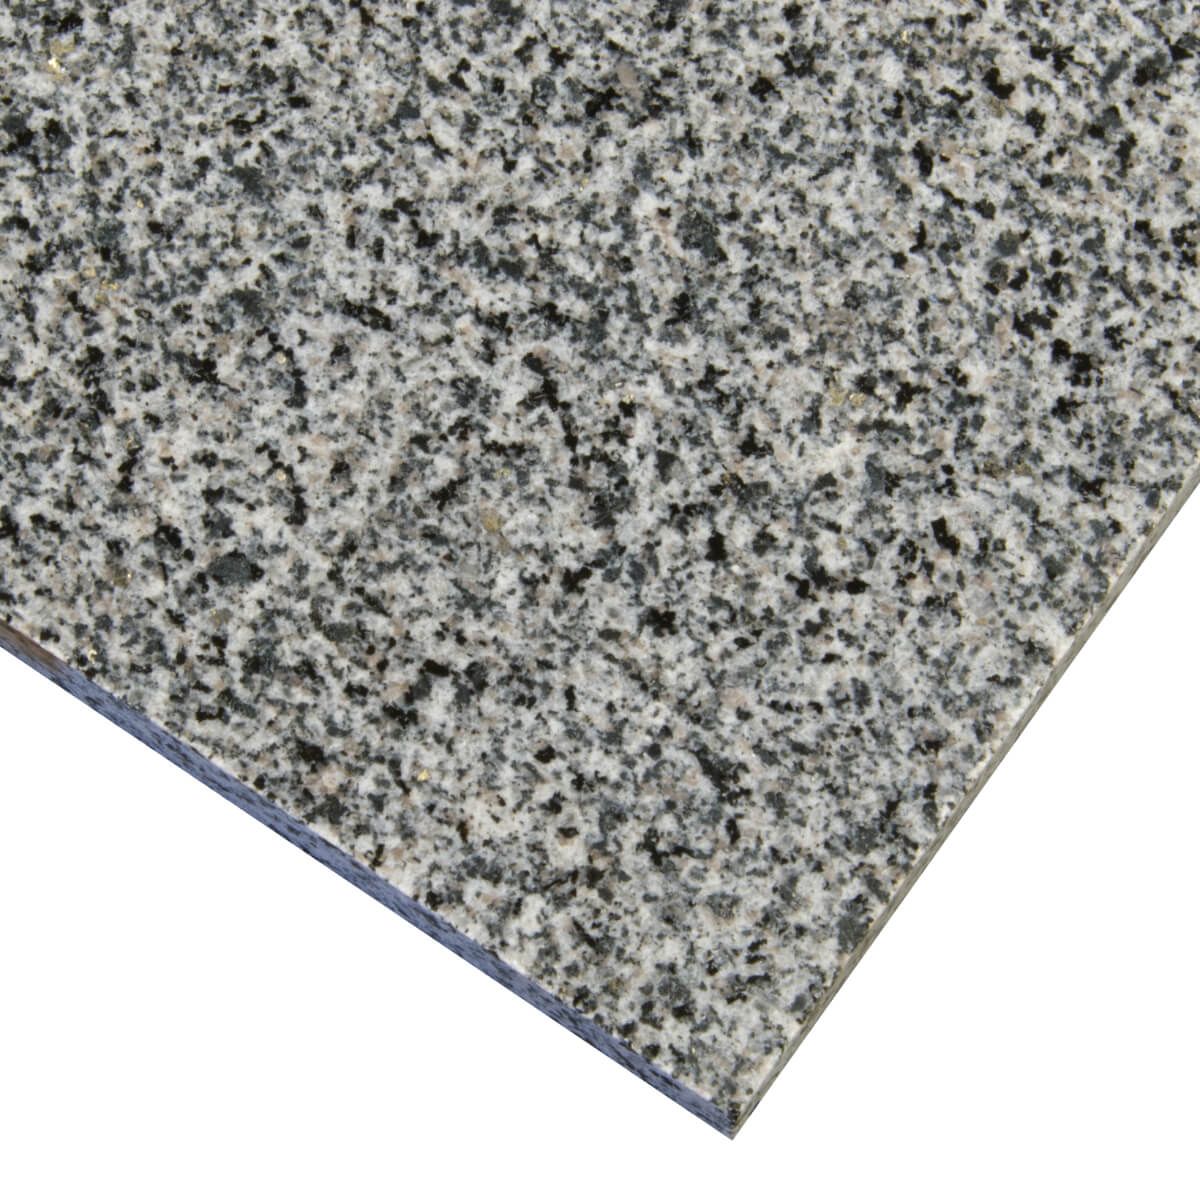 Płytki Granit G654 NEW Padang Dark polerowany 60x60x1,5 cm